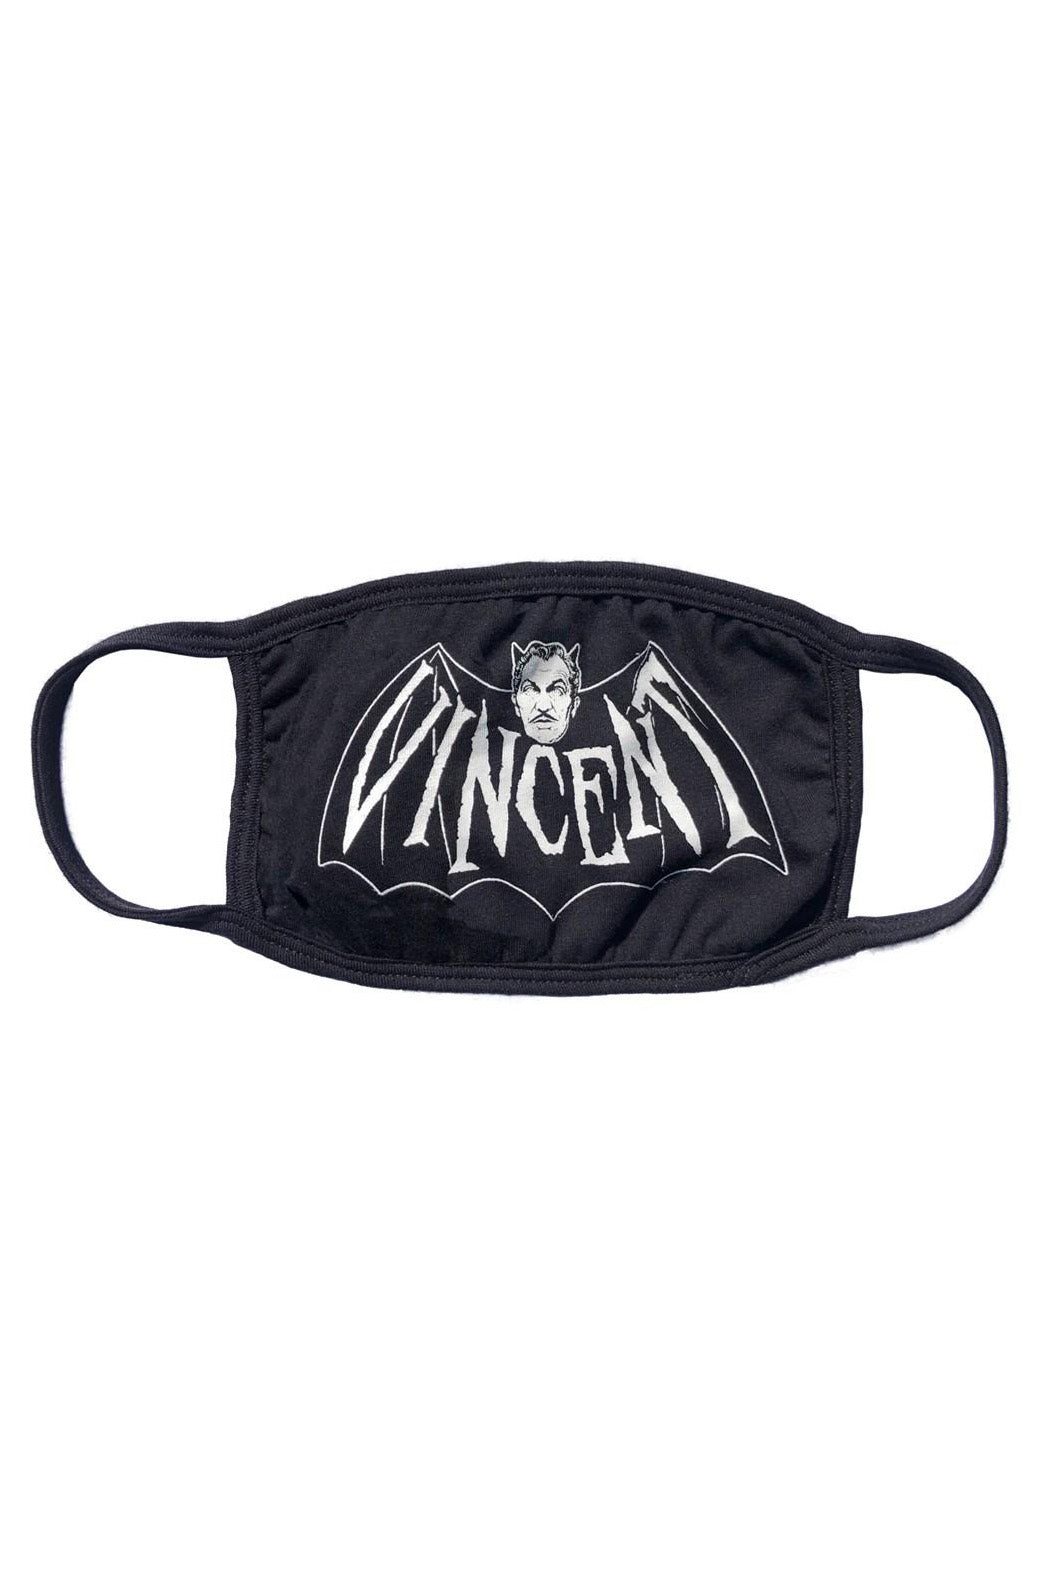 Vincent Price Bat Face Mask